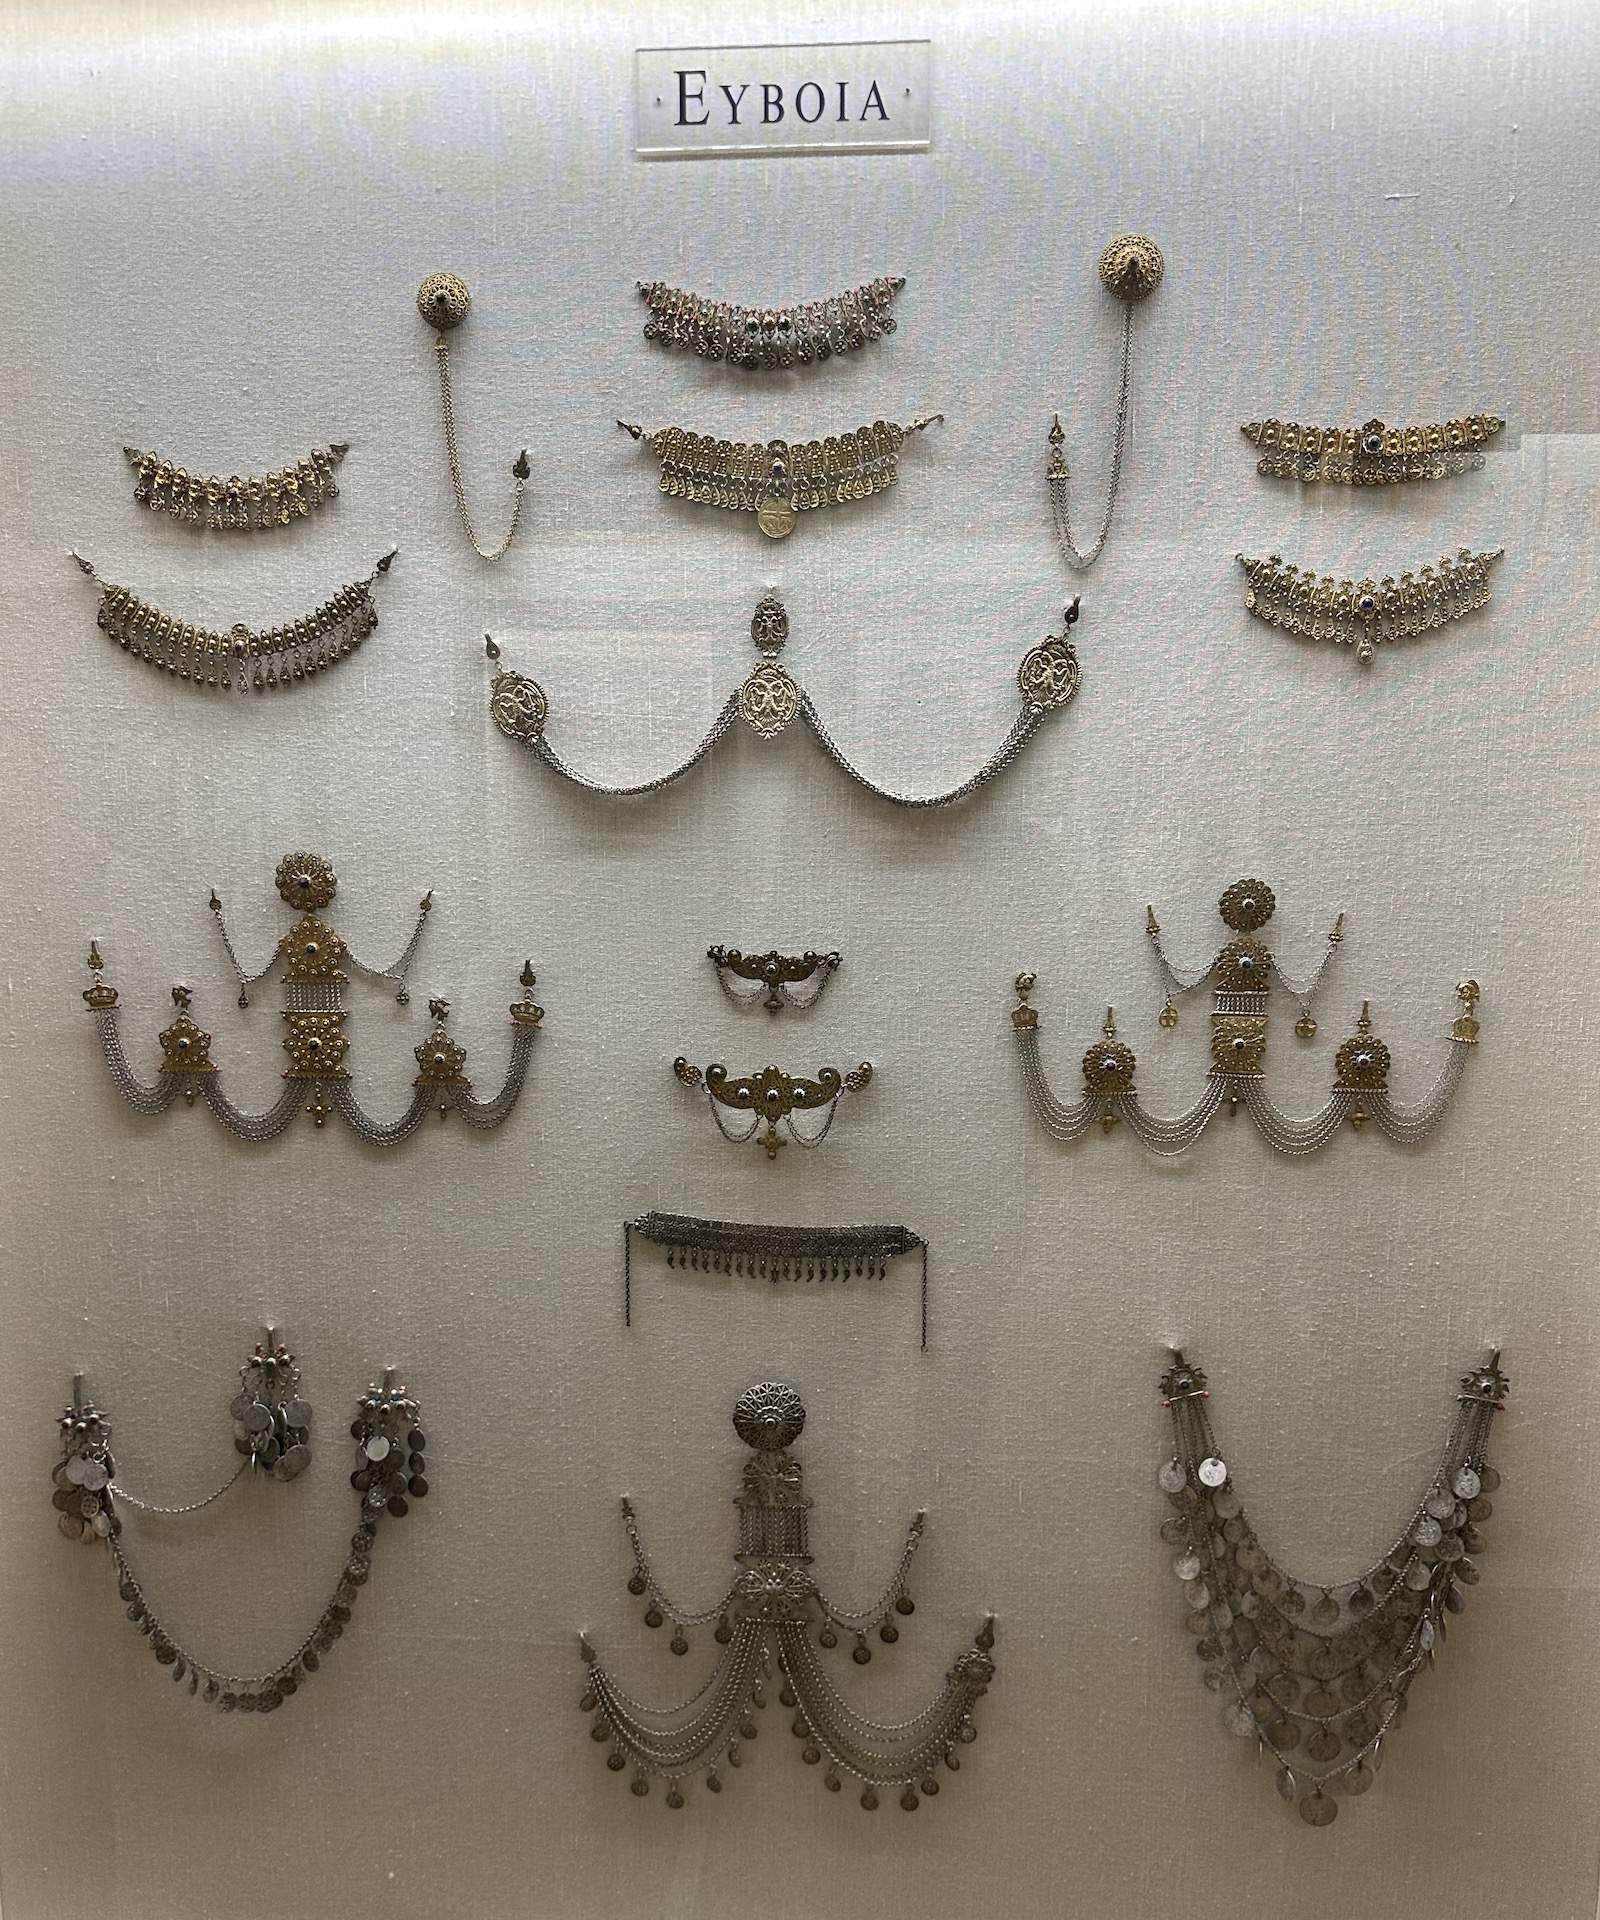 Jewelry from Euboia